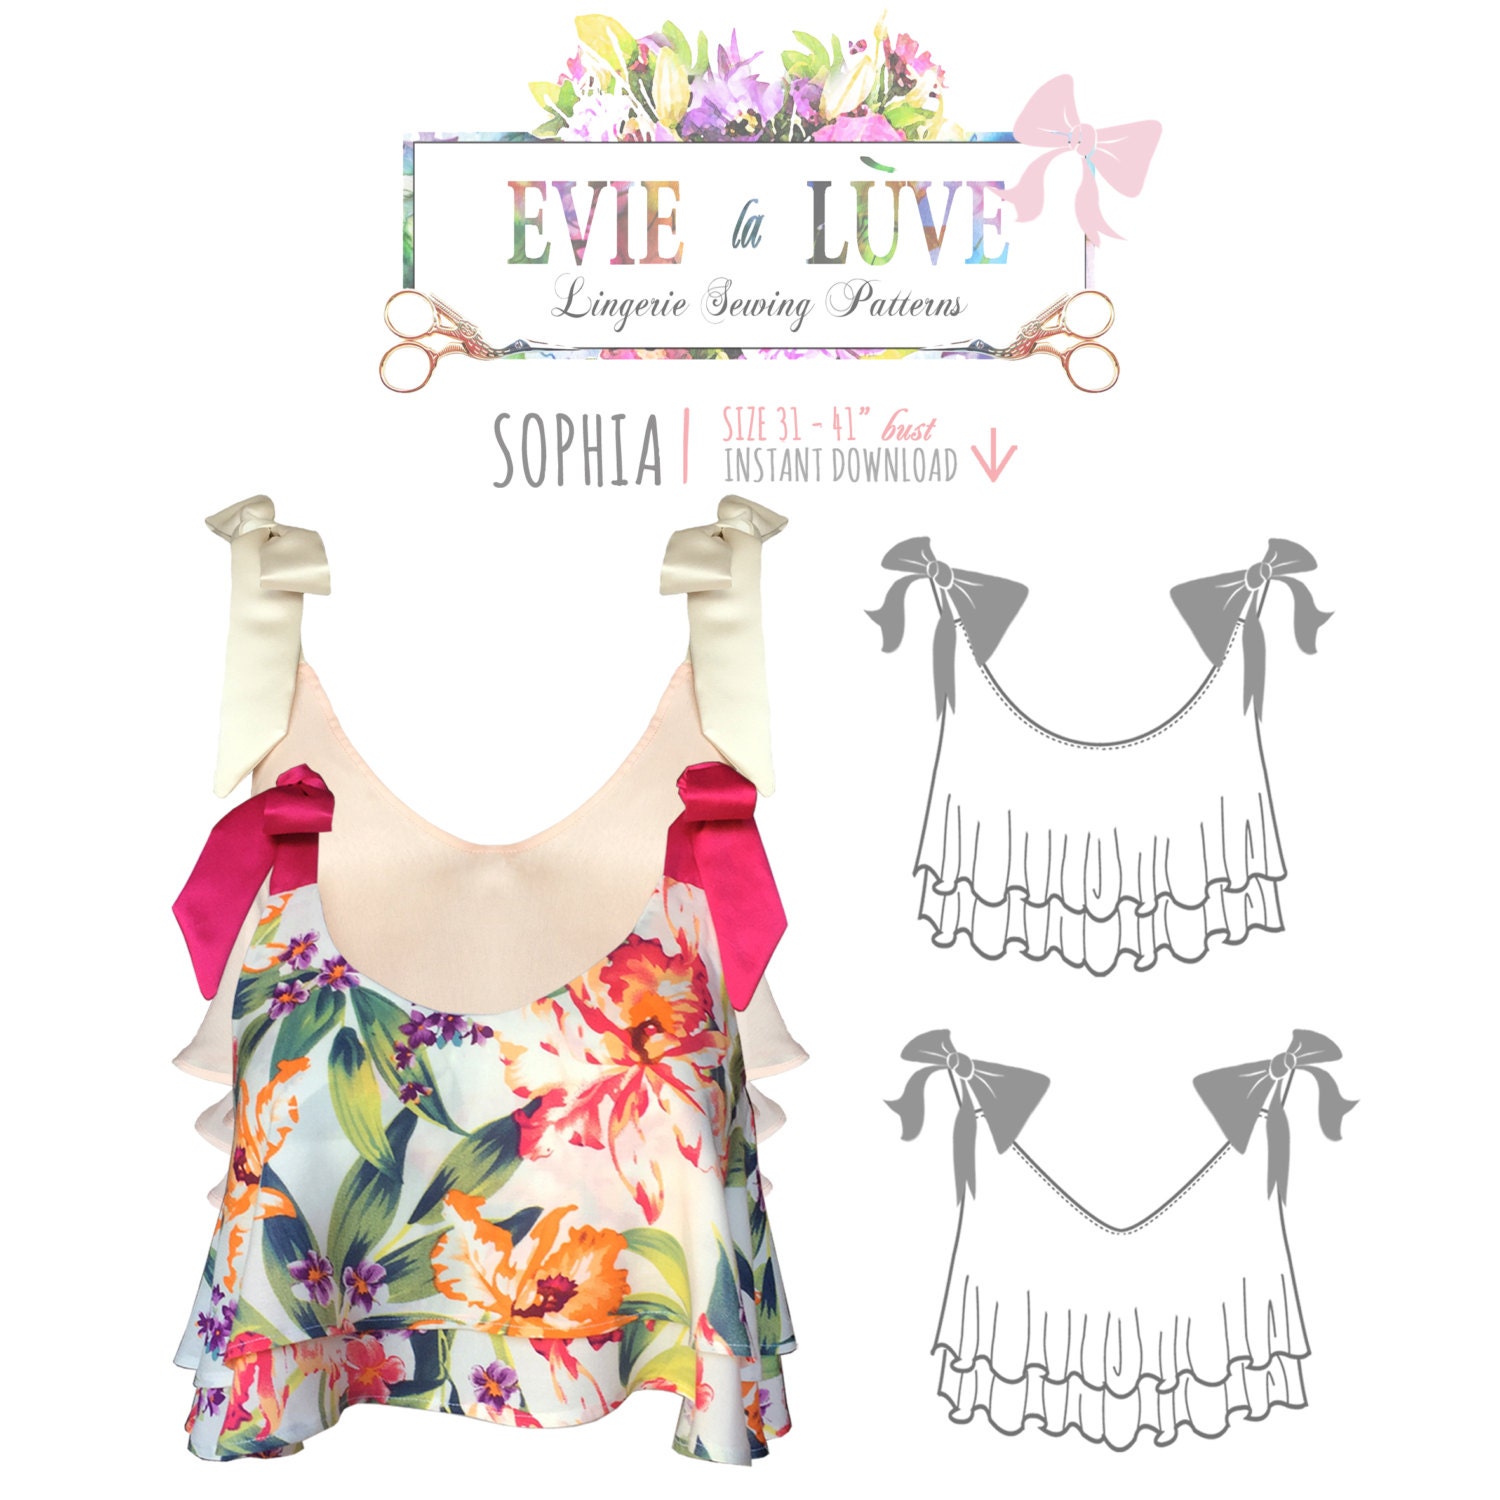 Chloe Thong Lingerie Sewing Pattern PDF Instant Download Evie La Luve 